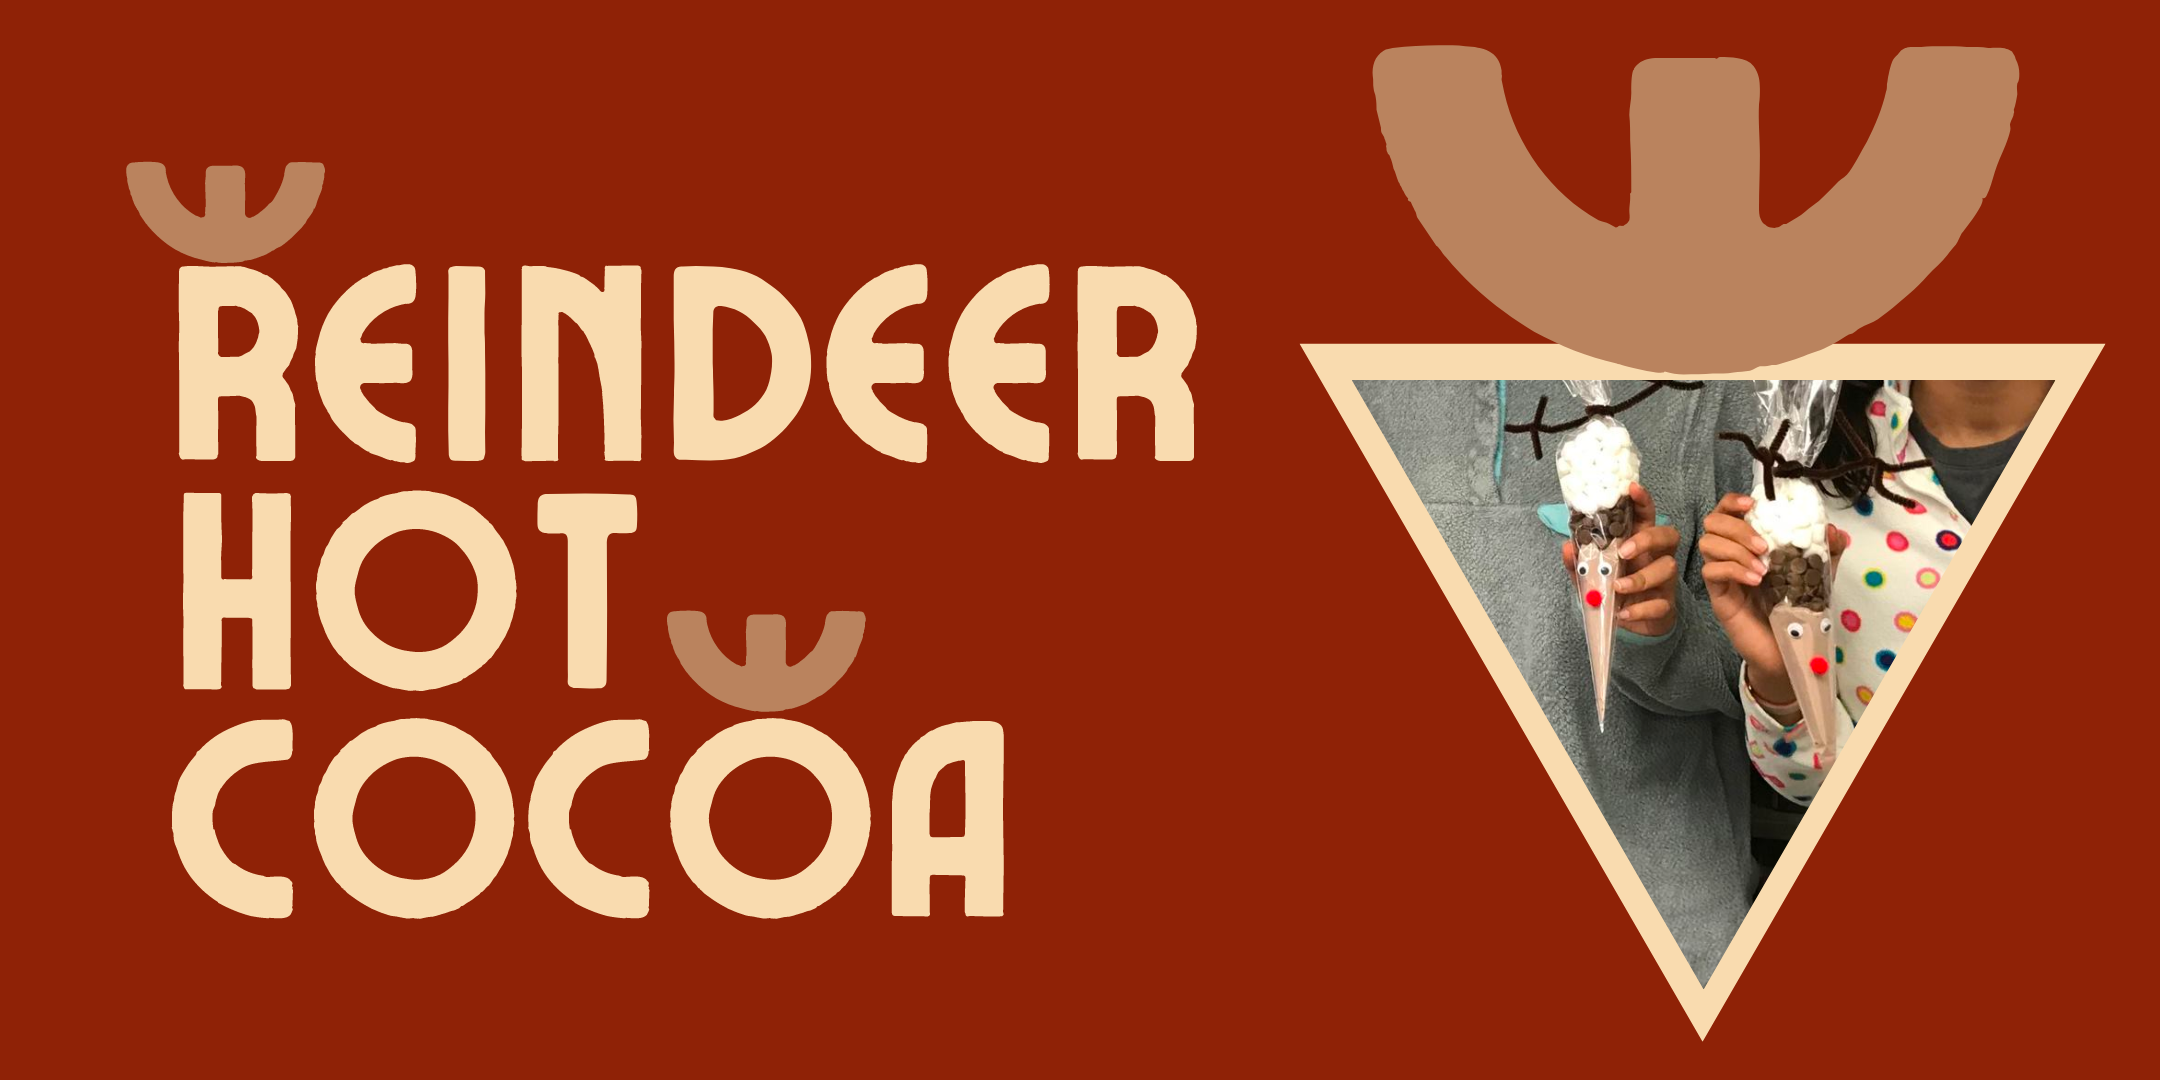 image of "Reindeer Hot Cocoa"